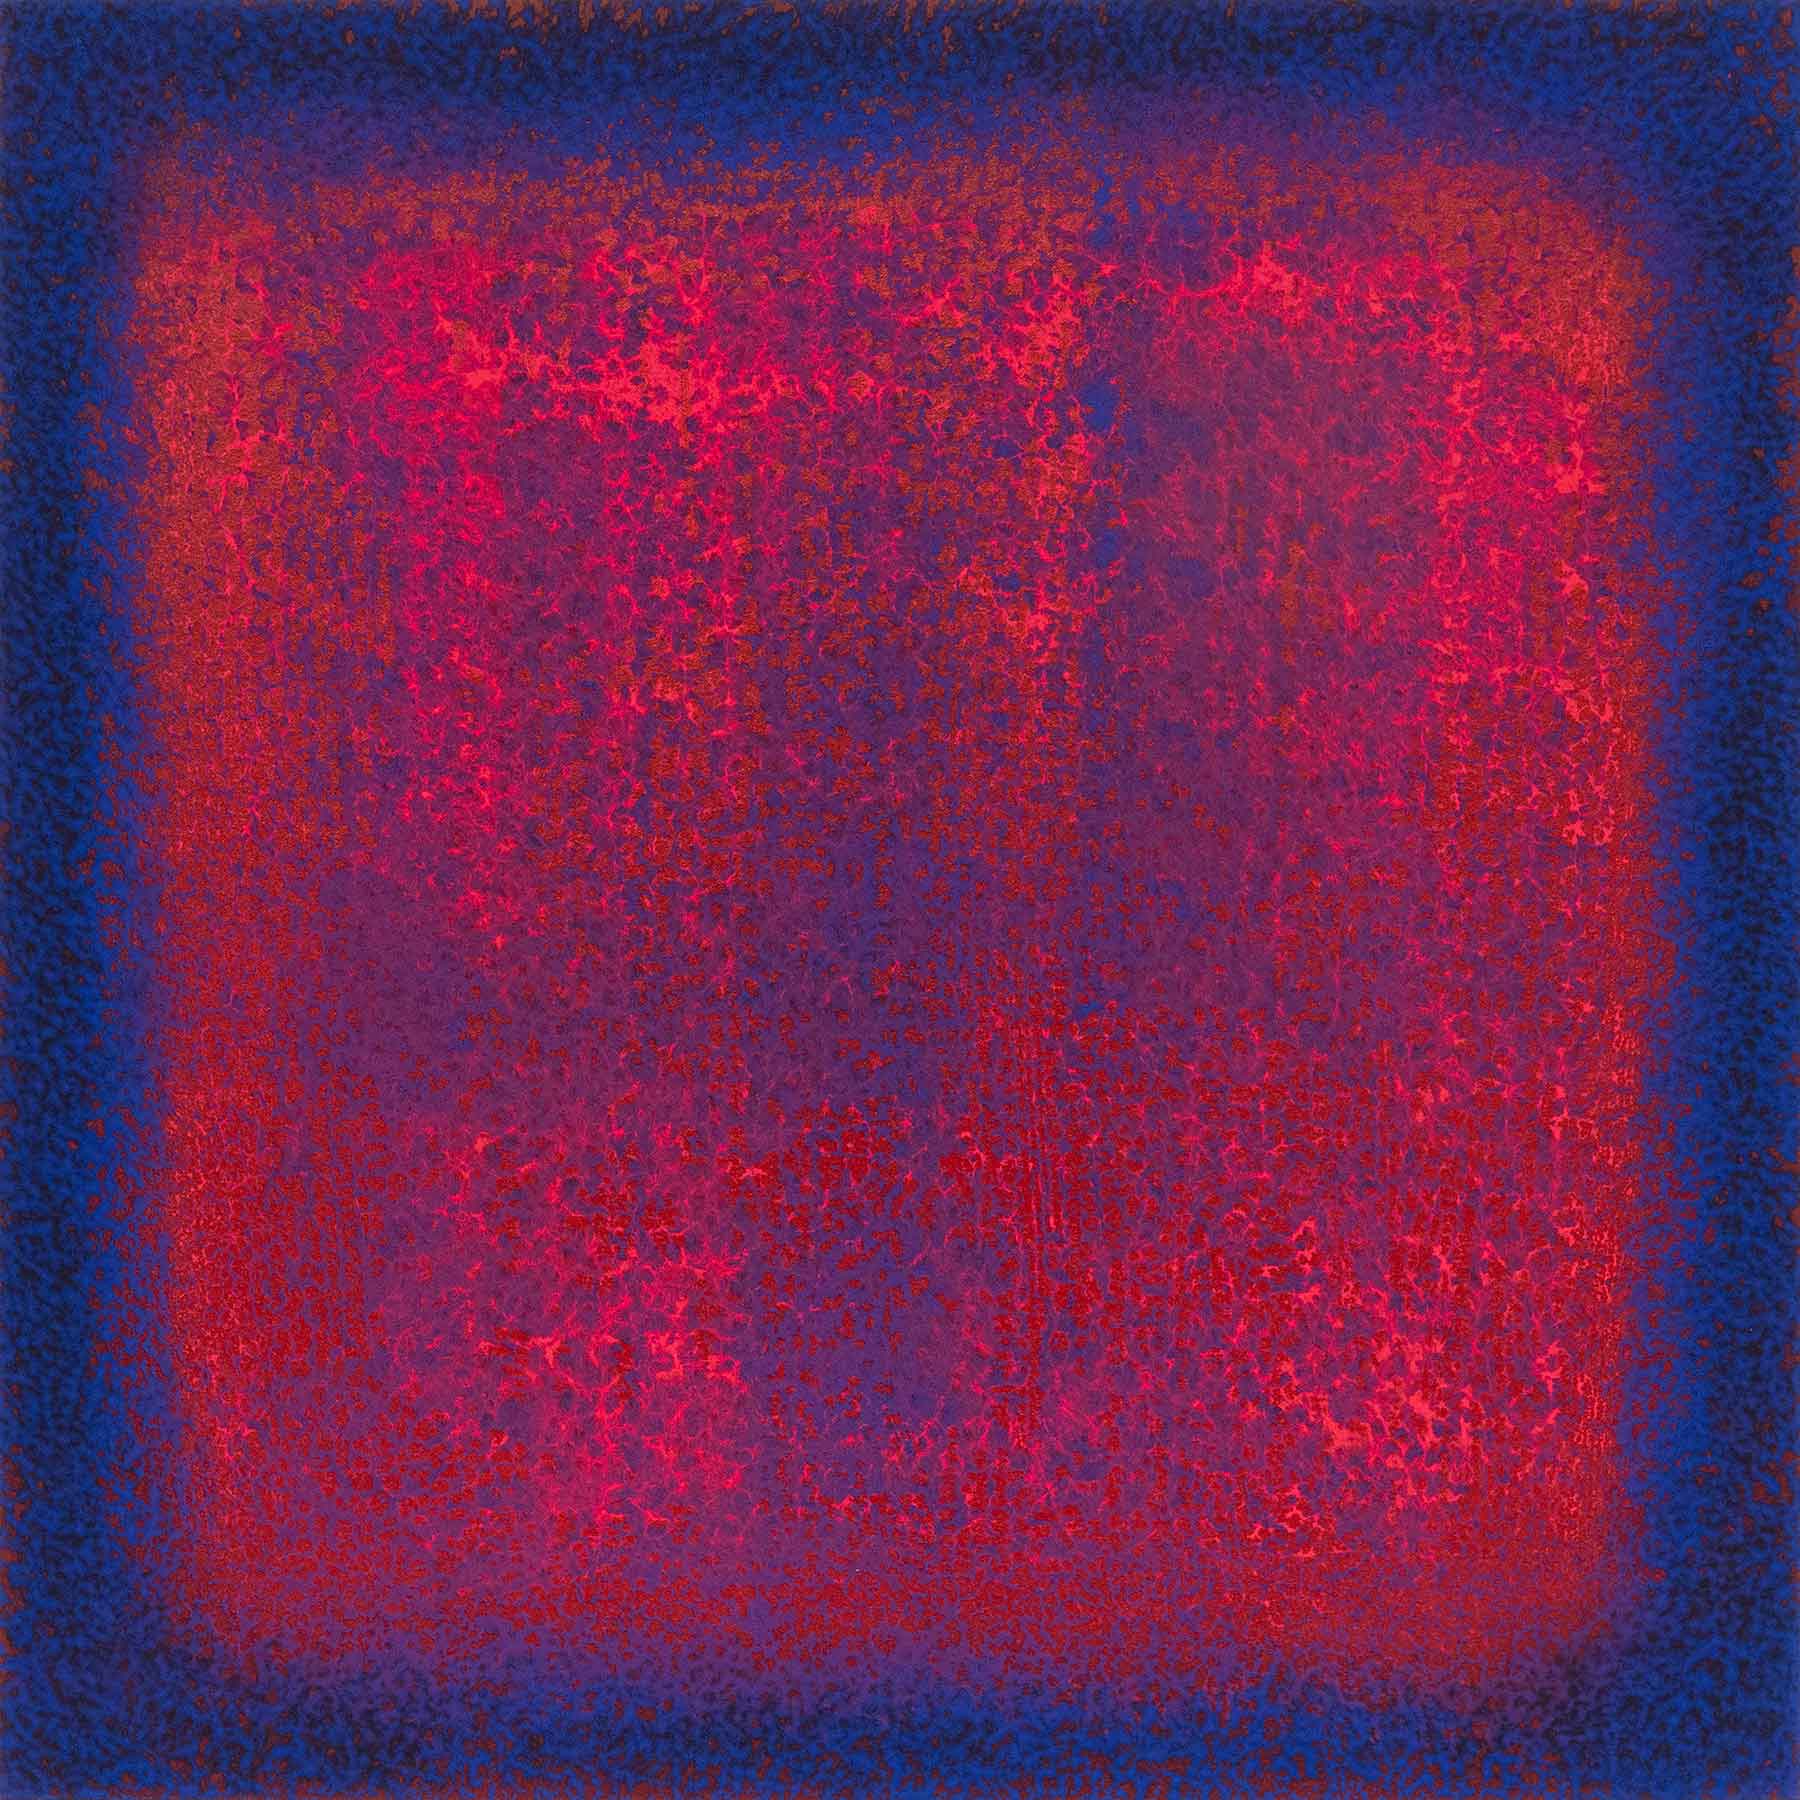 Rot Rot Ultamarin | 2021 |Öl & Acryl auf HDF-Platte | 50 x 50 x 0.3 cm